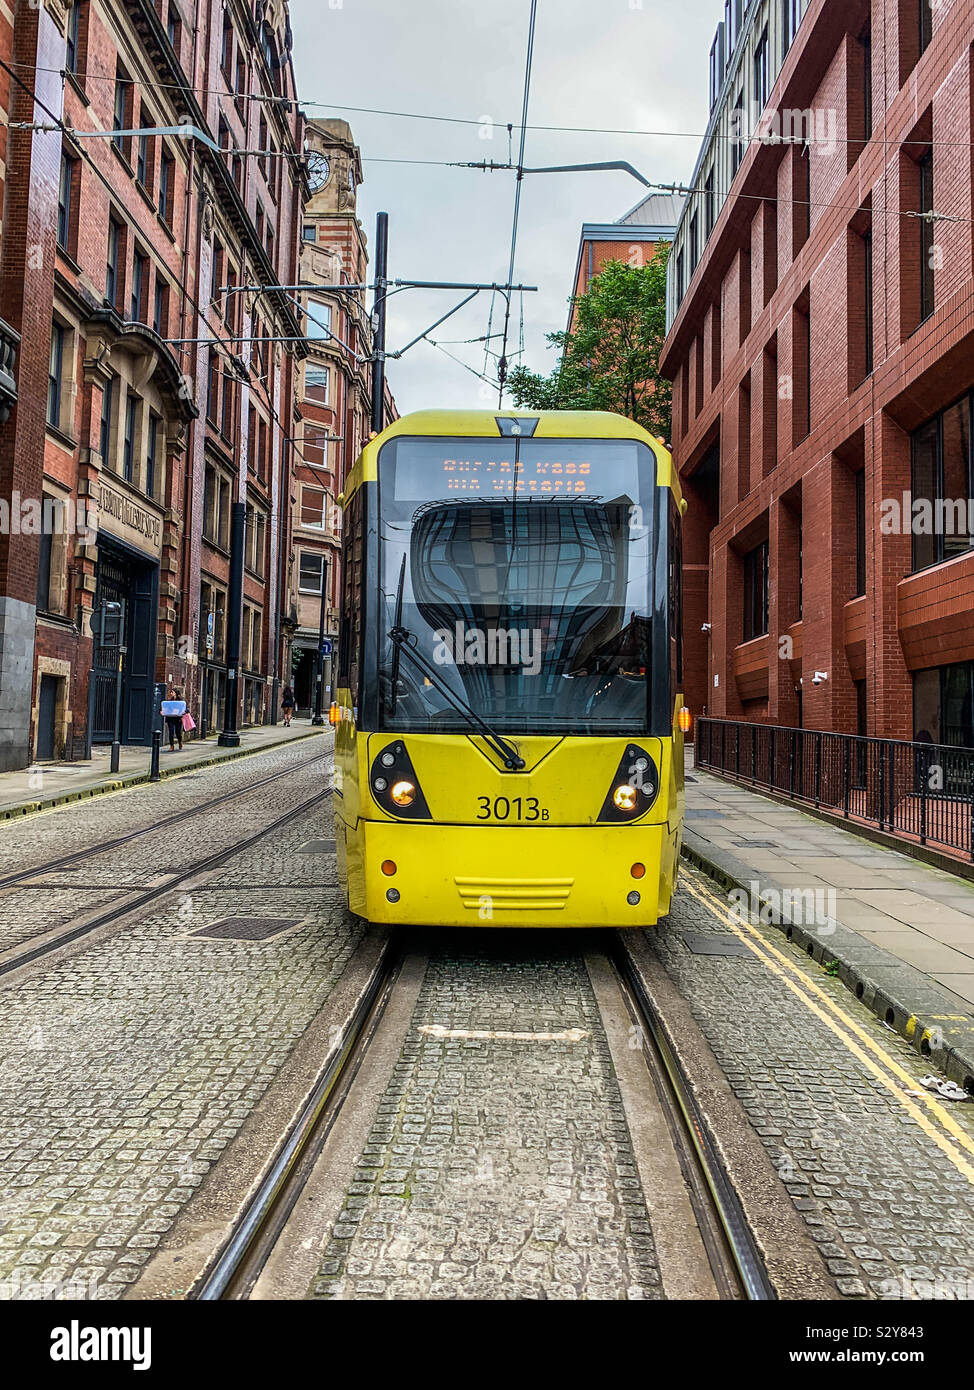 Metrolink tram in Manchester. Stockfoto